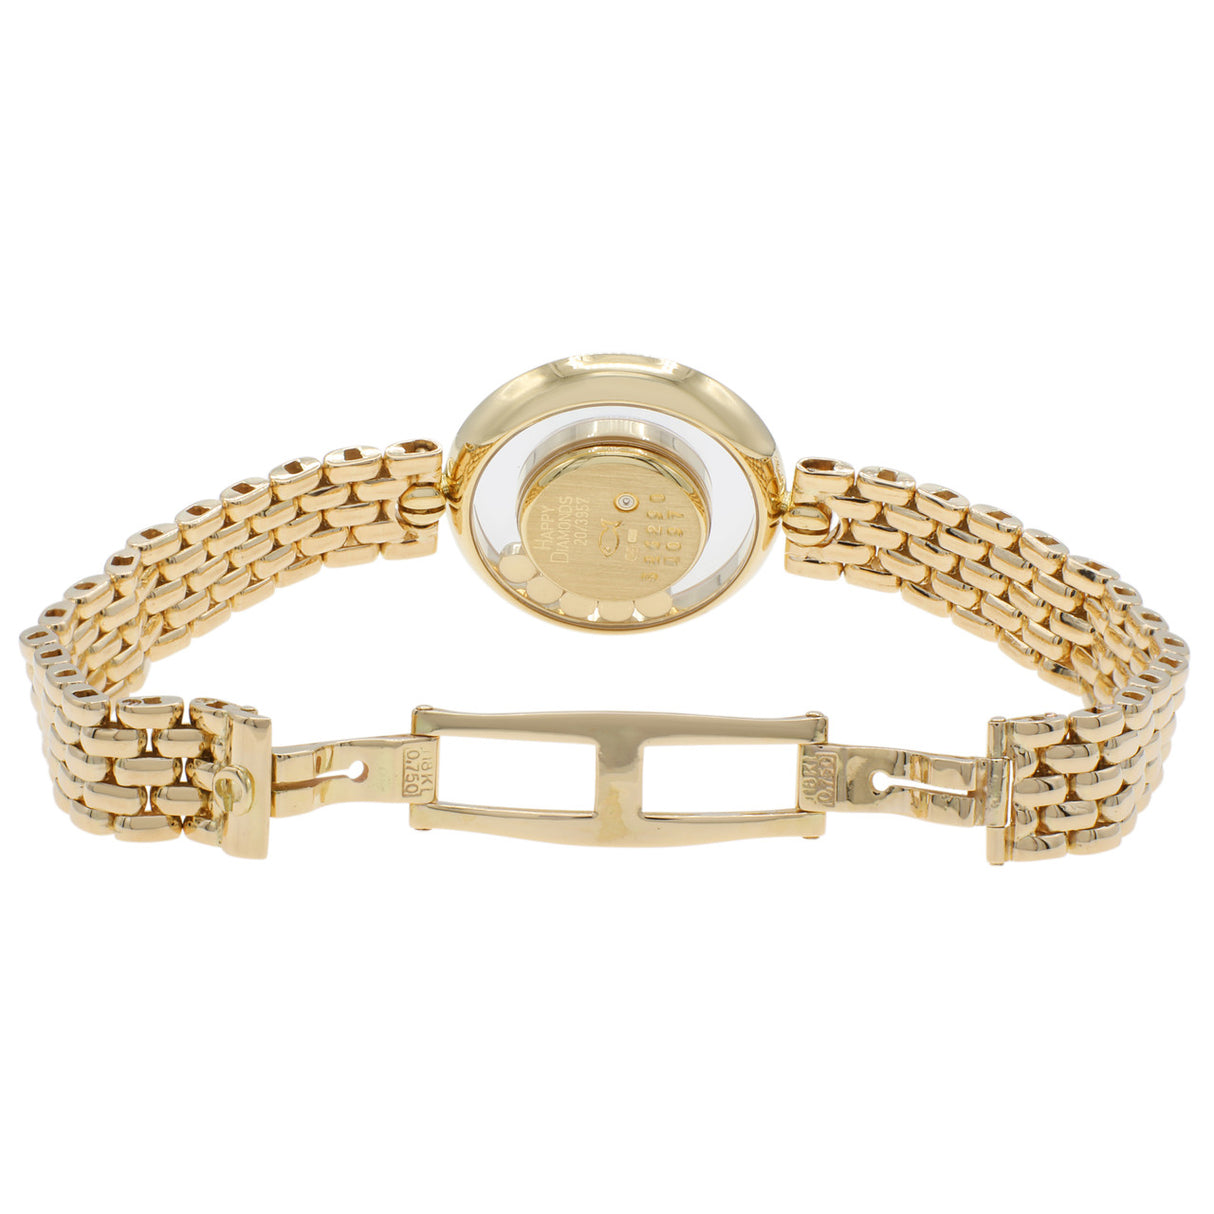 Chopard 18K Yellow Gold Happy Diamond  Watch